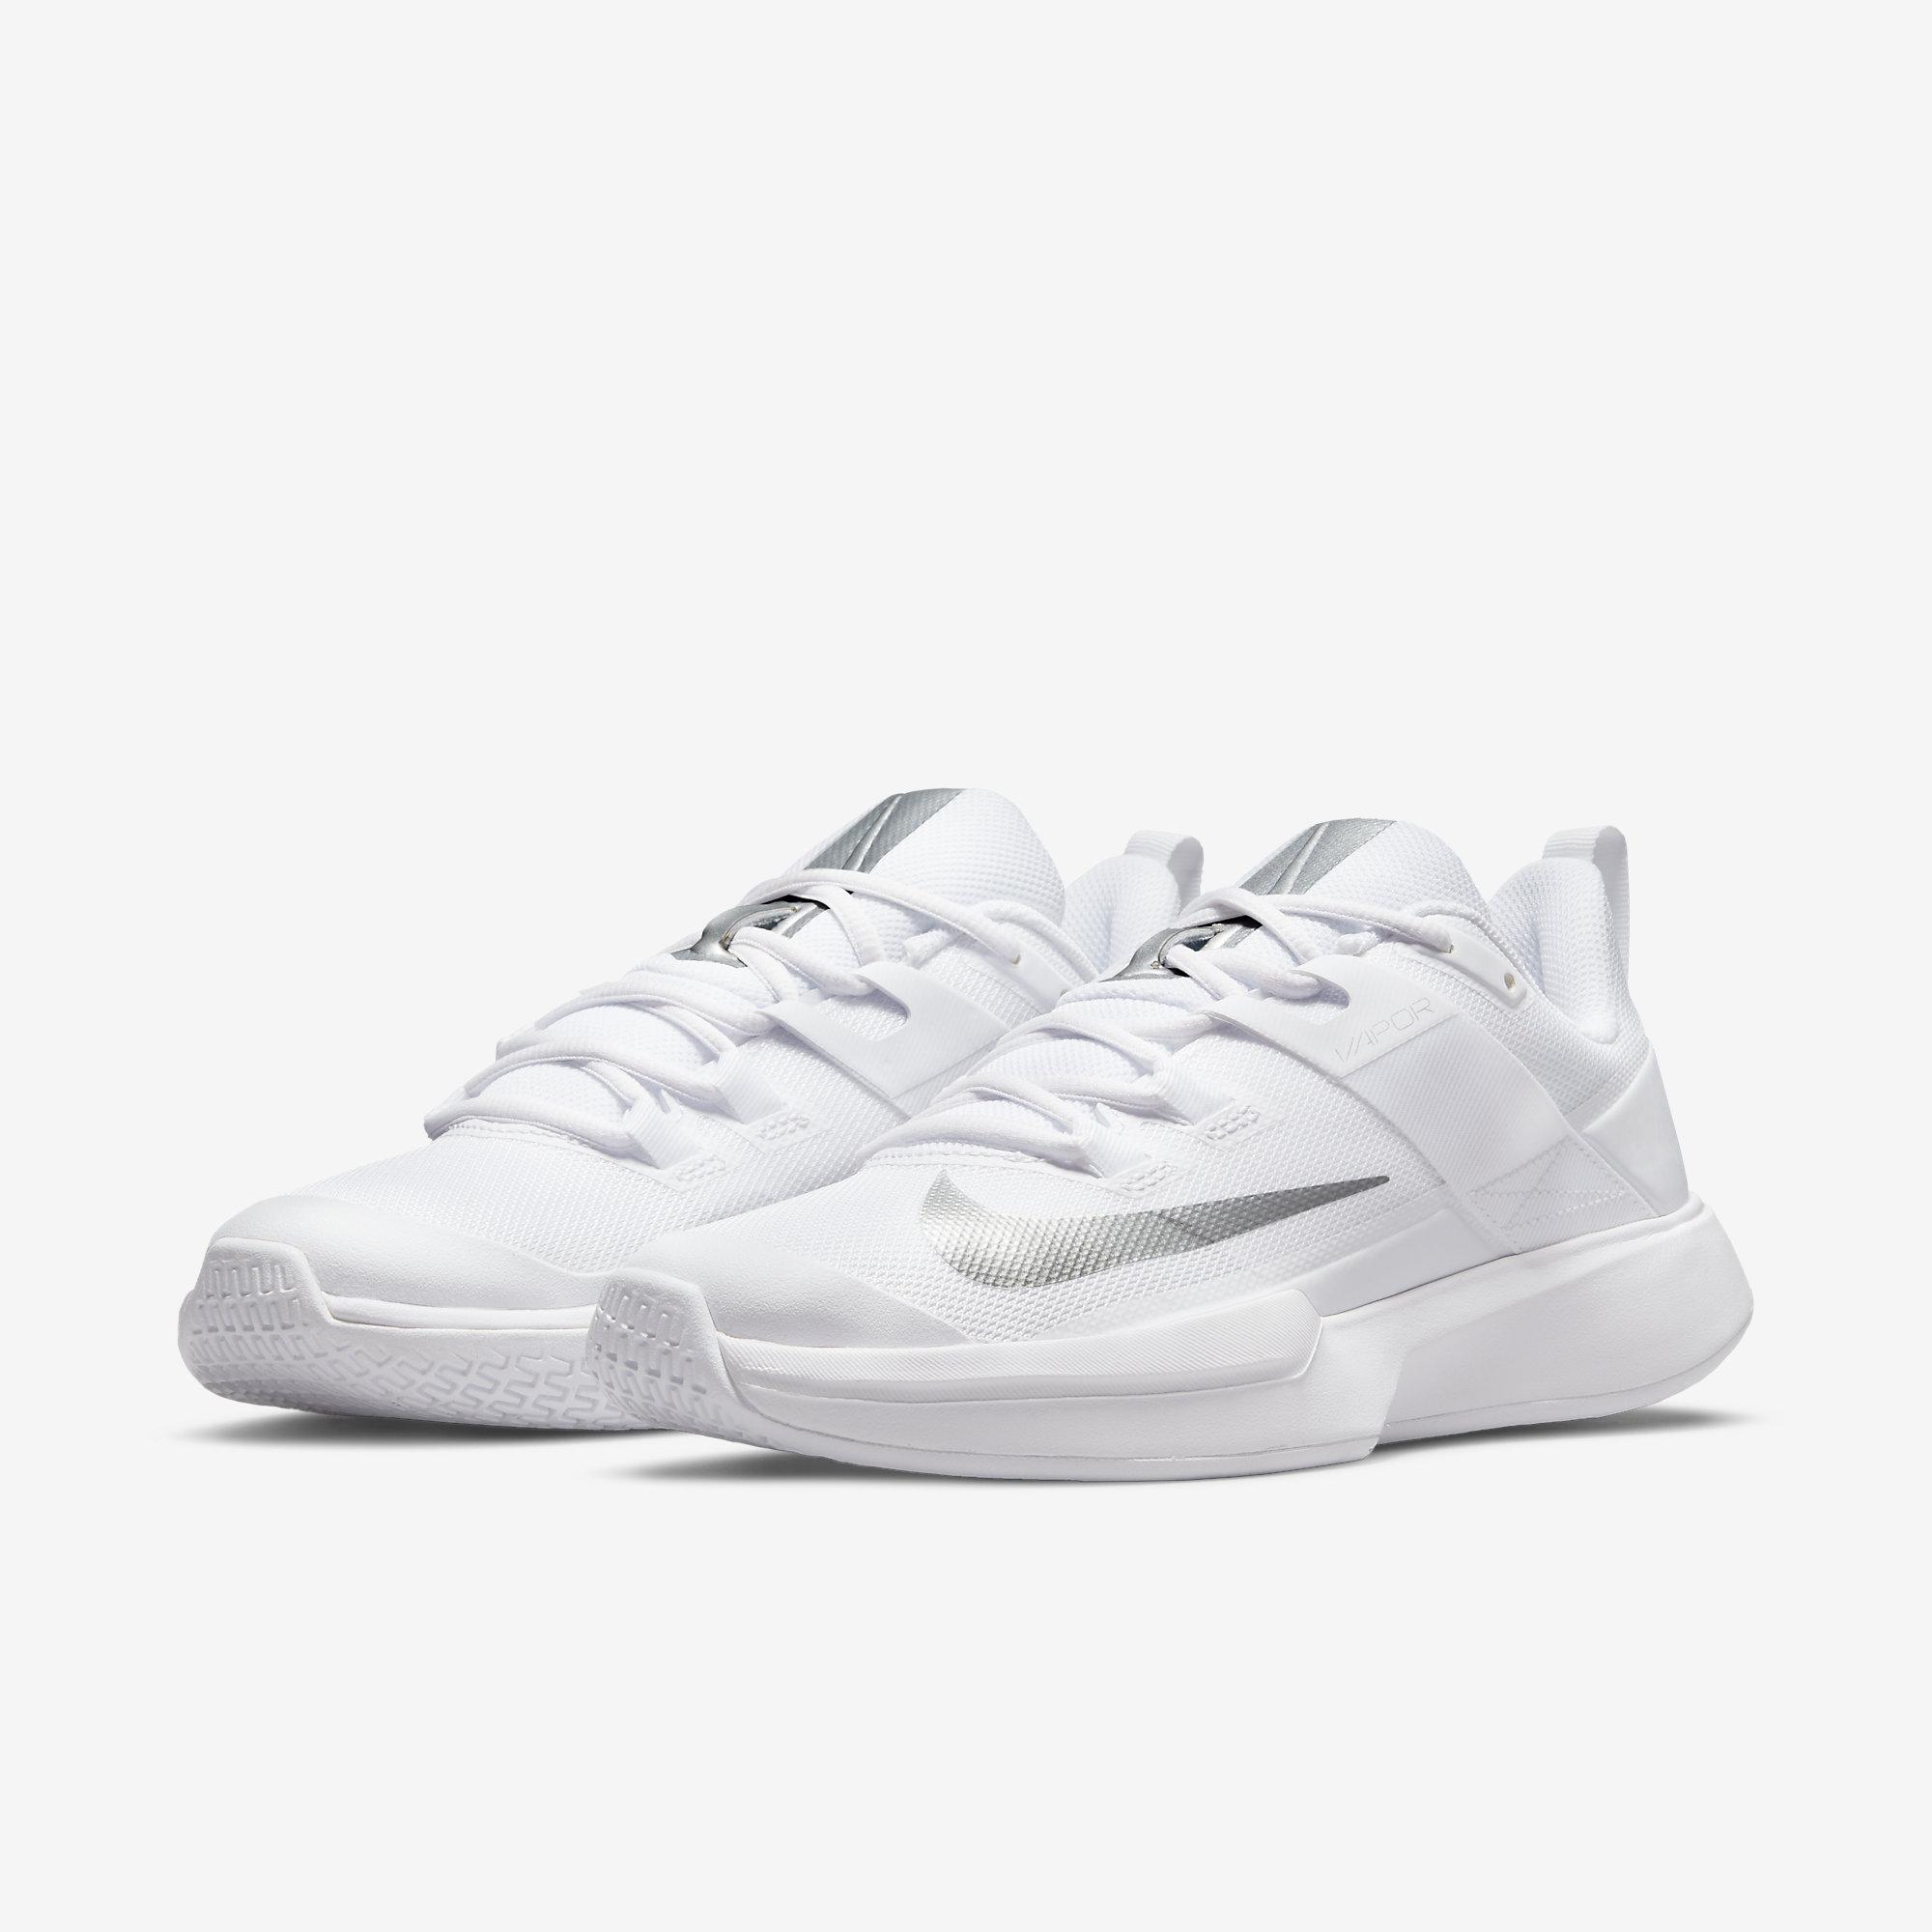 Nike Womens Vapor Lite Tennis Shoes - White/Silver - Tennisnuts.com